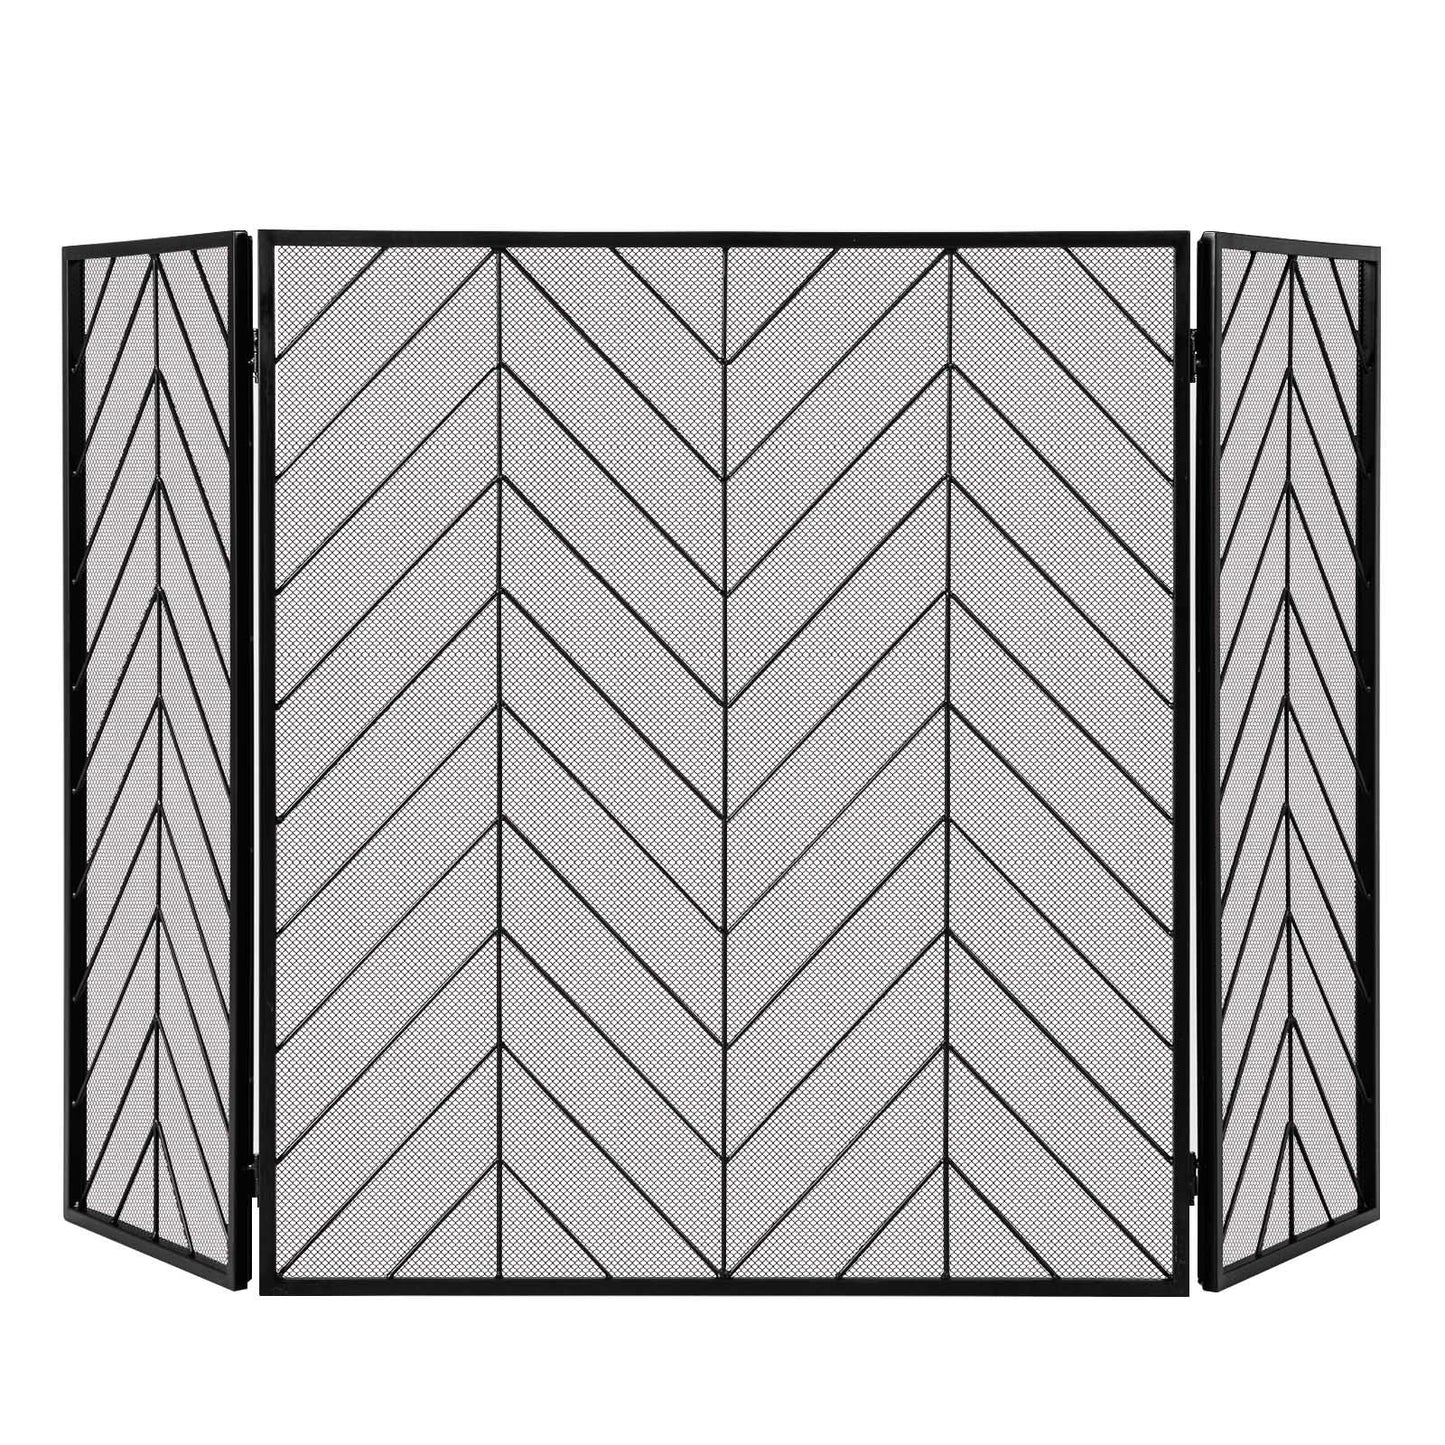 3-Panel Metal Foldable Fireplace Screen with Metal Mesh, Black